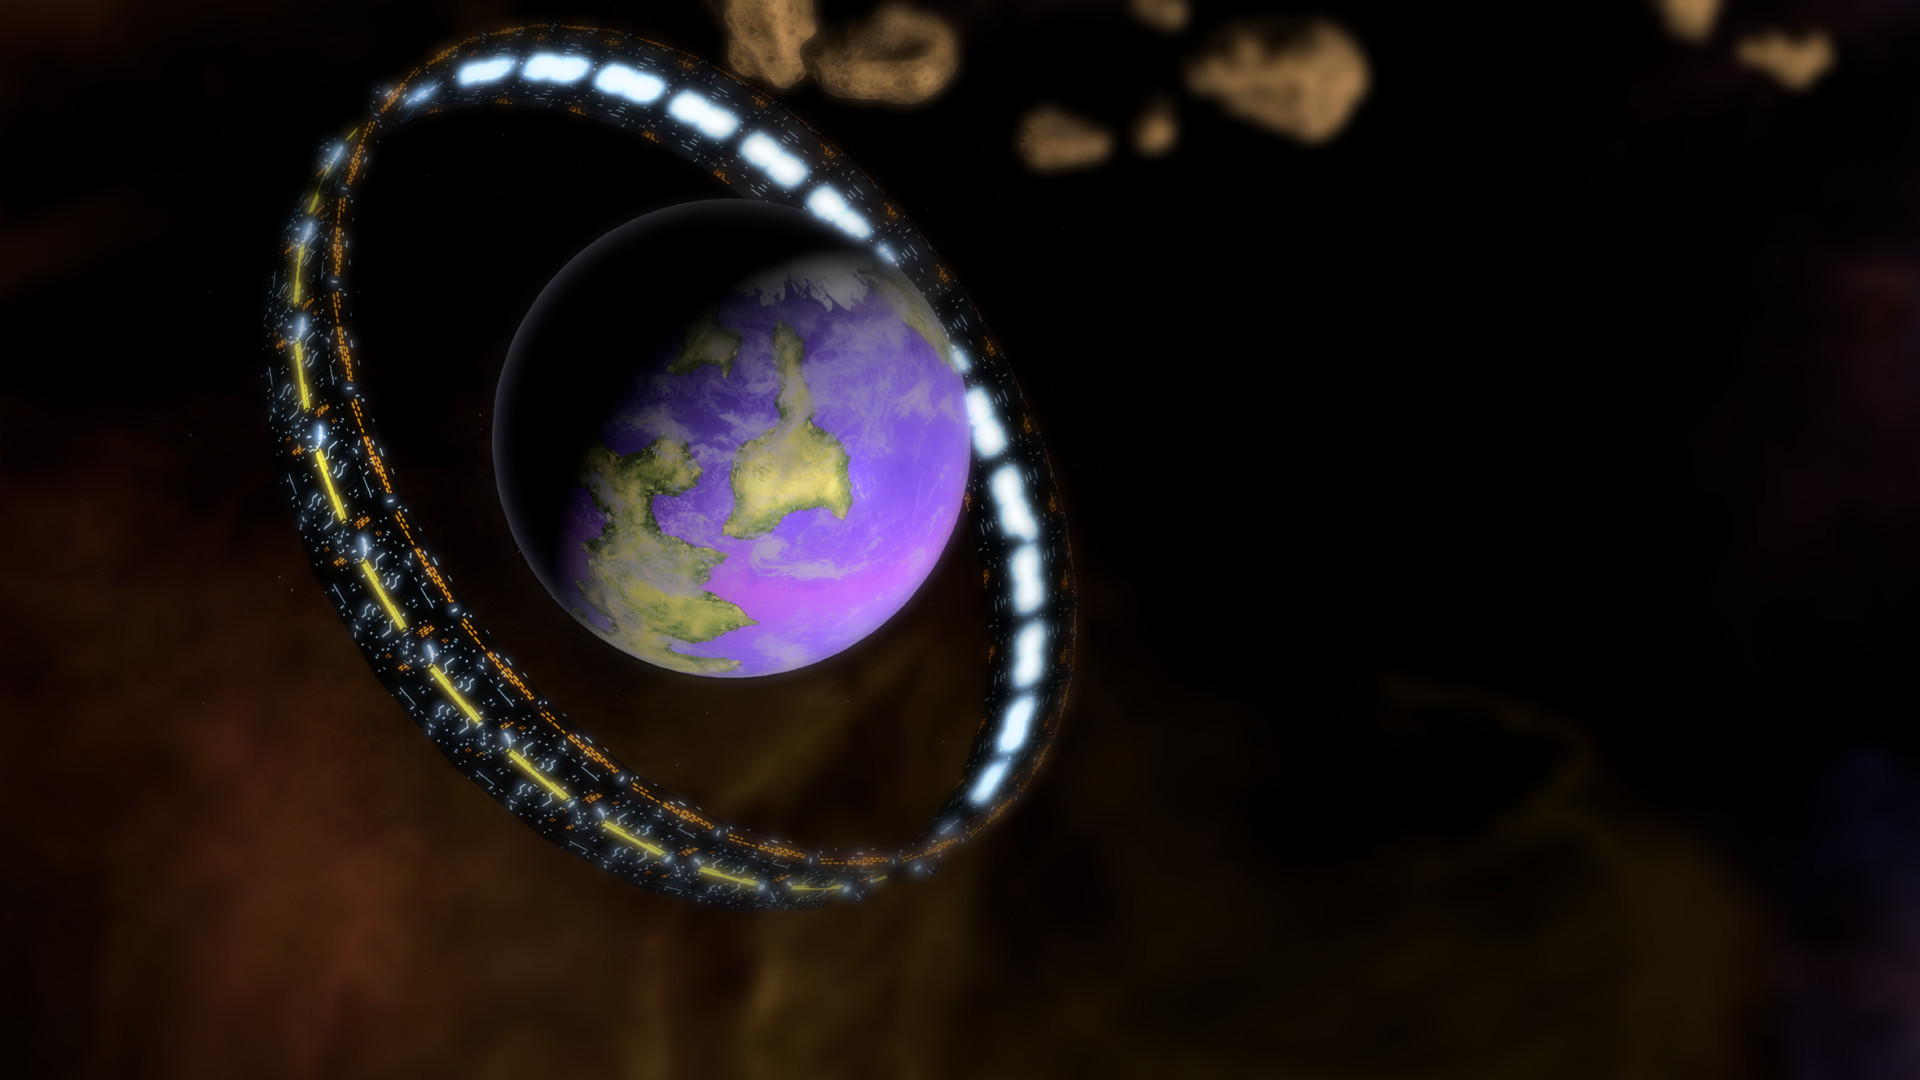 Galactic Civilizations III - Precursor Worlds DLC Featured Screenshot #1